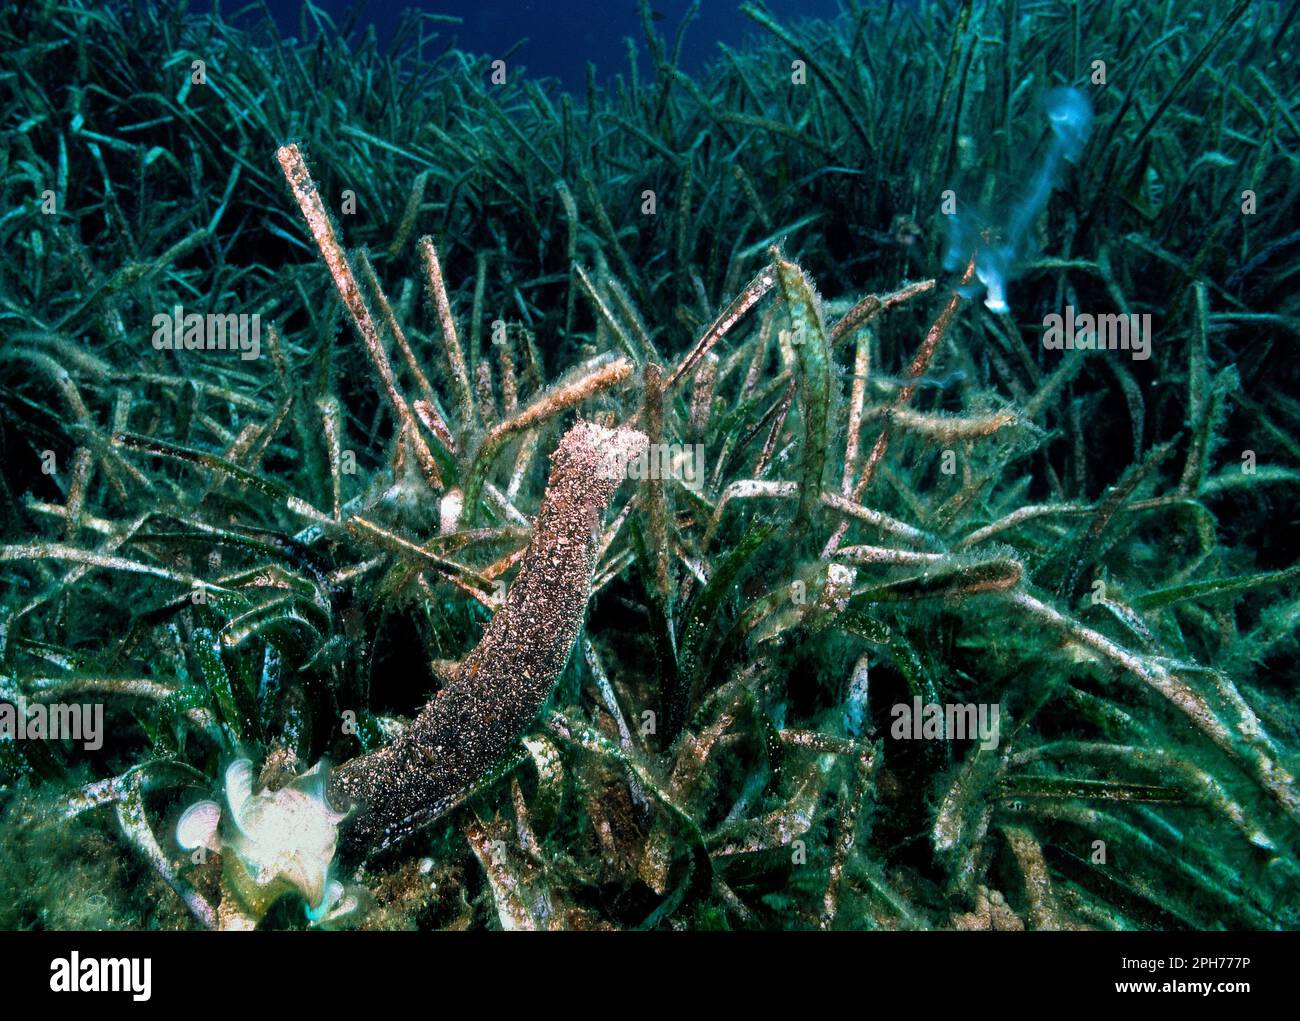 Tubular sea cucumber, during spawning, Oloturia (Holothuria  tubulosa) espelle all'esterno il liquido spermatico. Capo Caccia. Alghero, Sardegna. Stock Photo